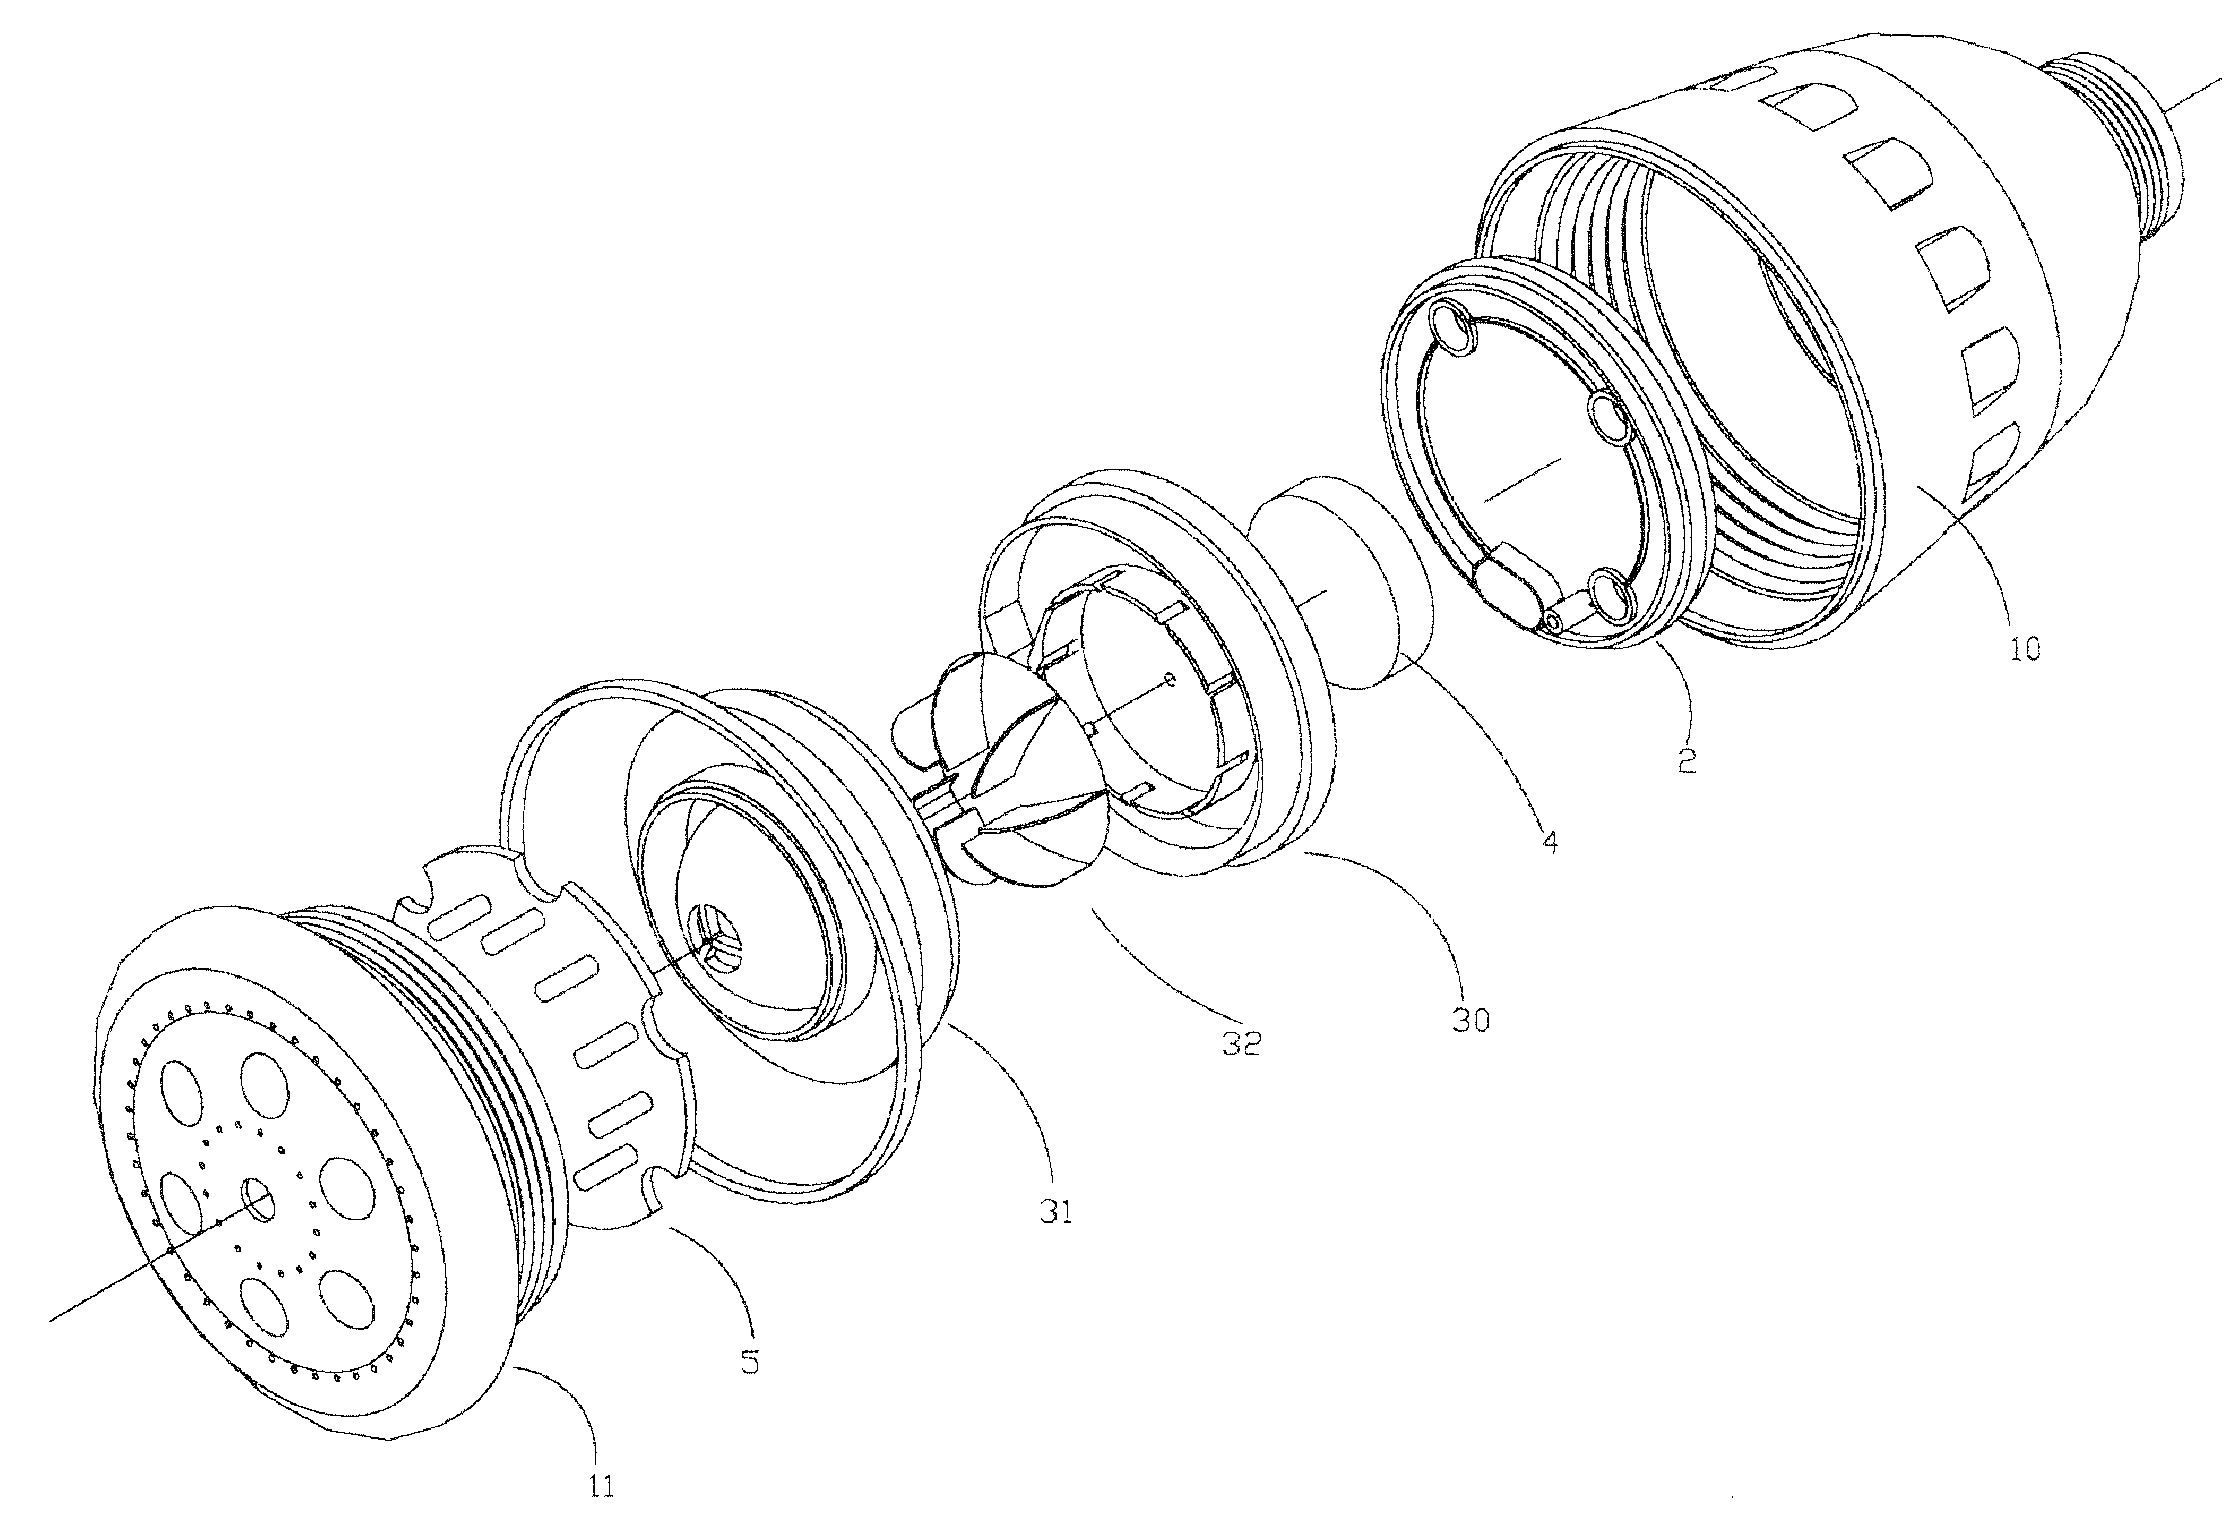 Showerhead with turbocharger mechanism